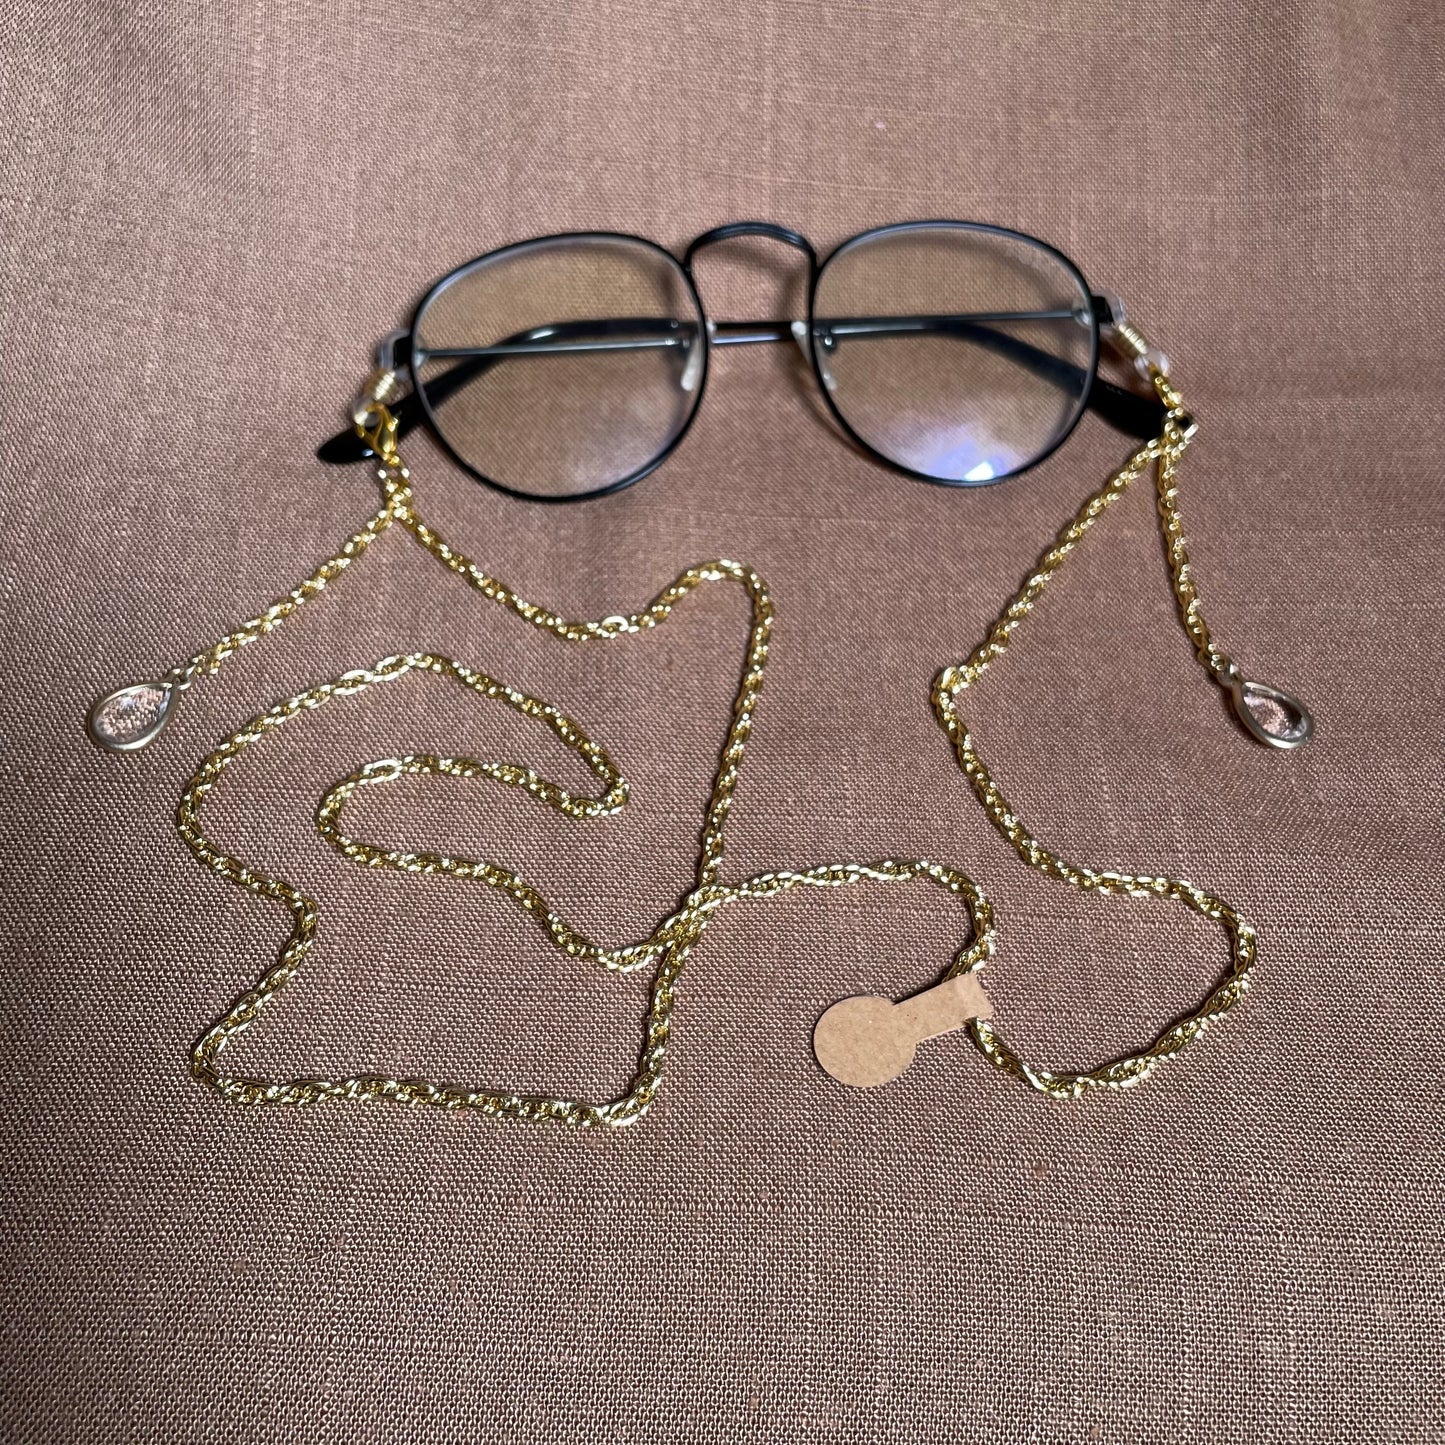 Dream drop eyeglass chain